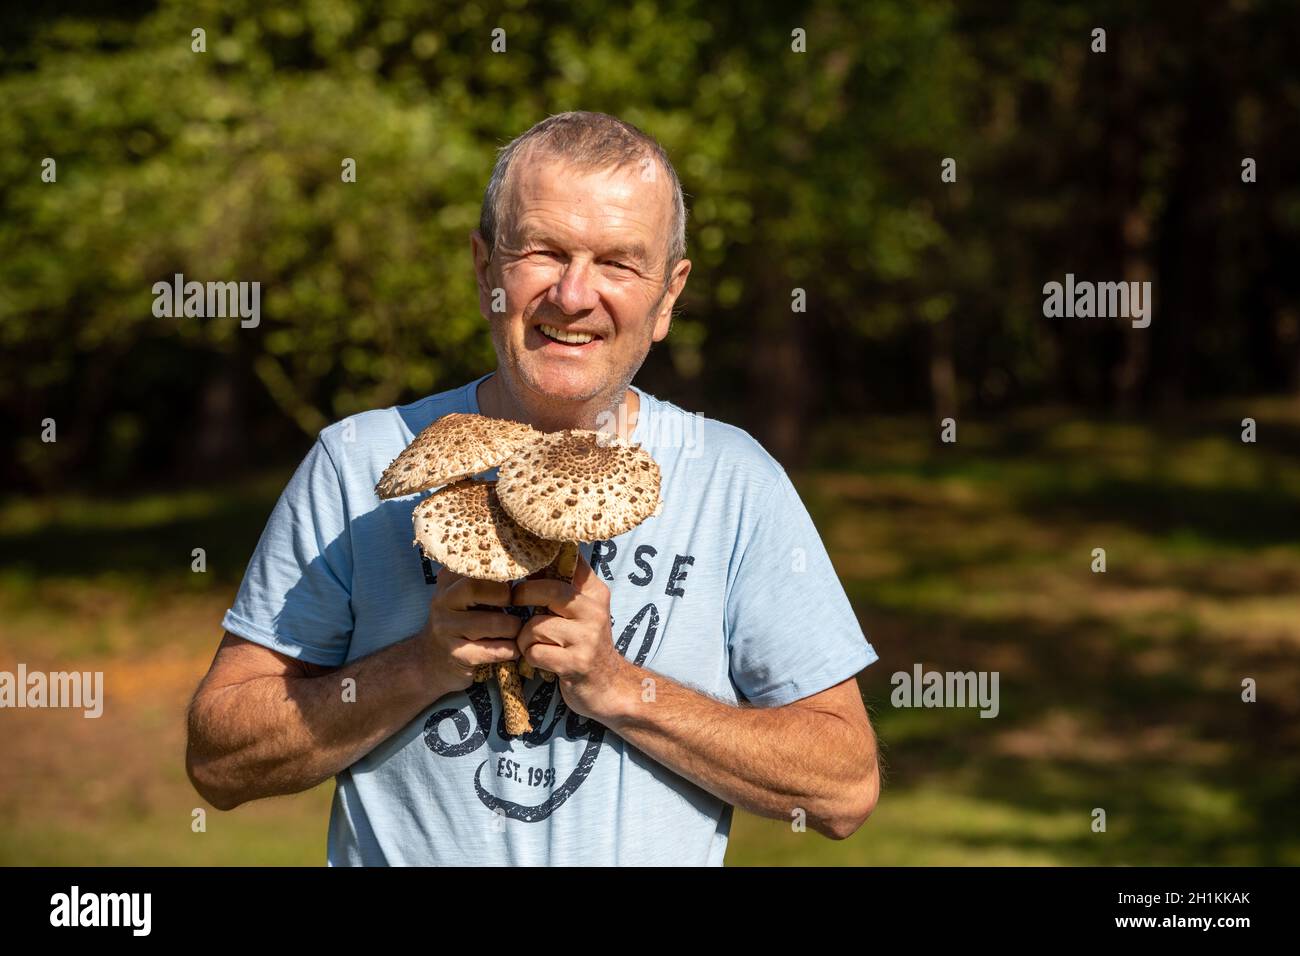 Jantar, Poland - September 11, 2020: Ripe parasol mushroom Macrolepiota procera or Lepiota procera in the mushroom picker's hand Stock Photo